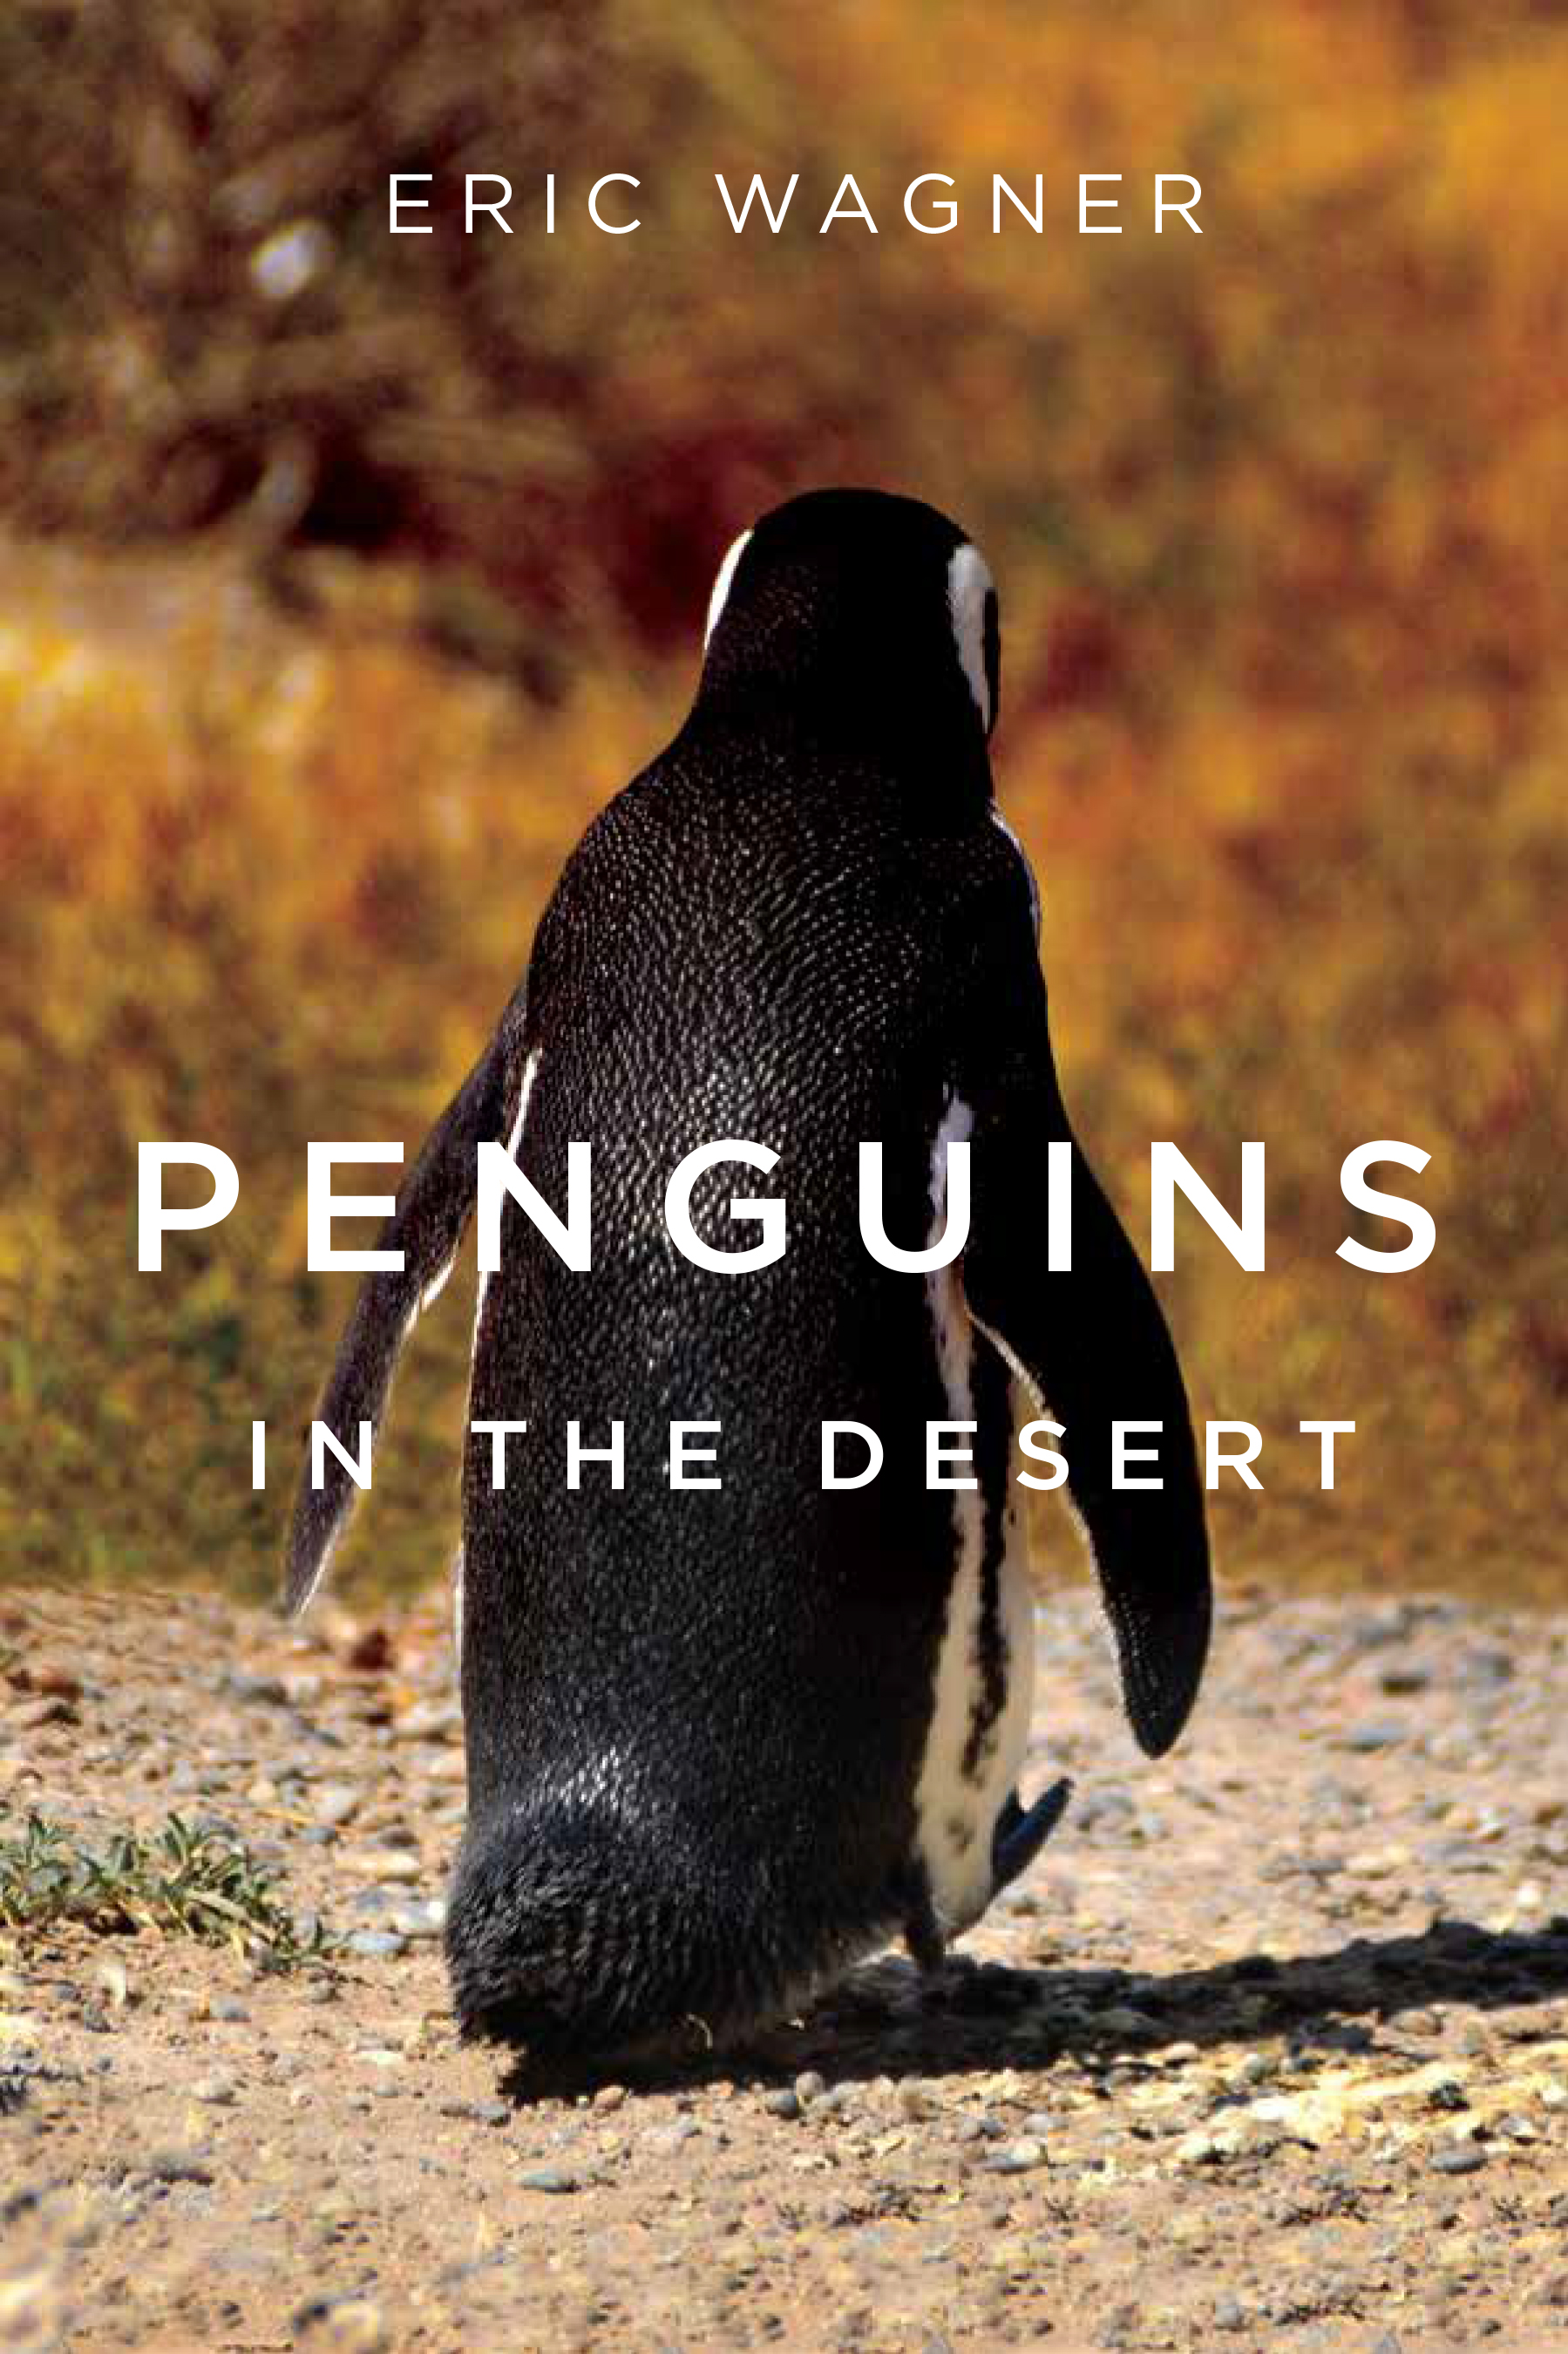 "Penguins in the Desert" by Eric Wagner